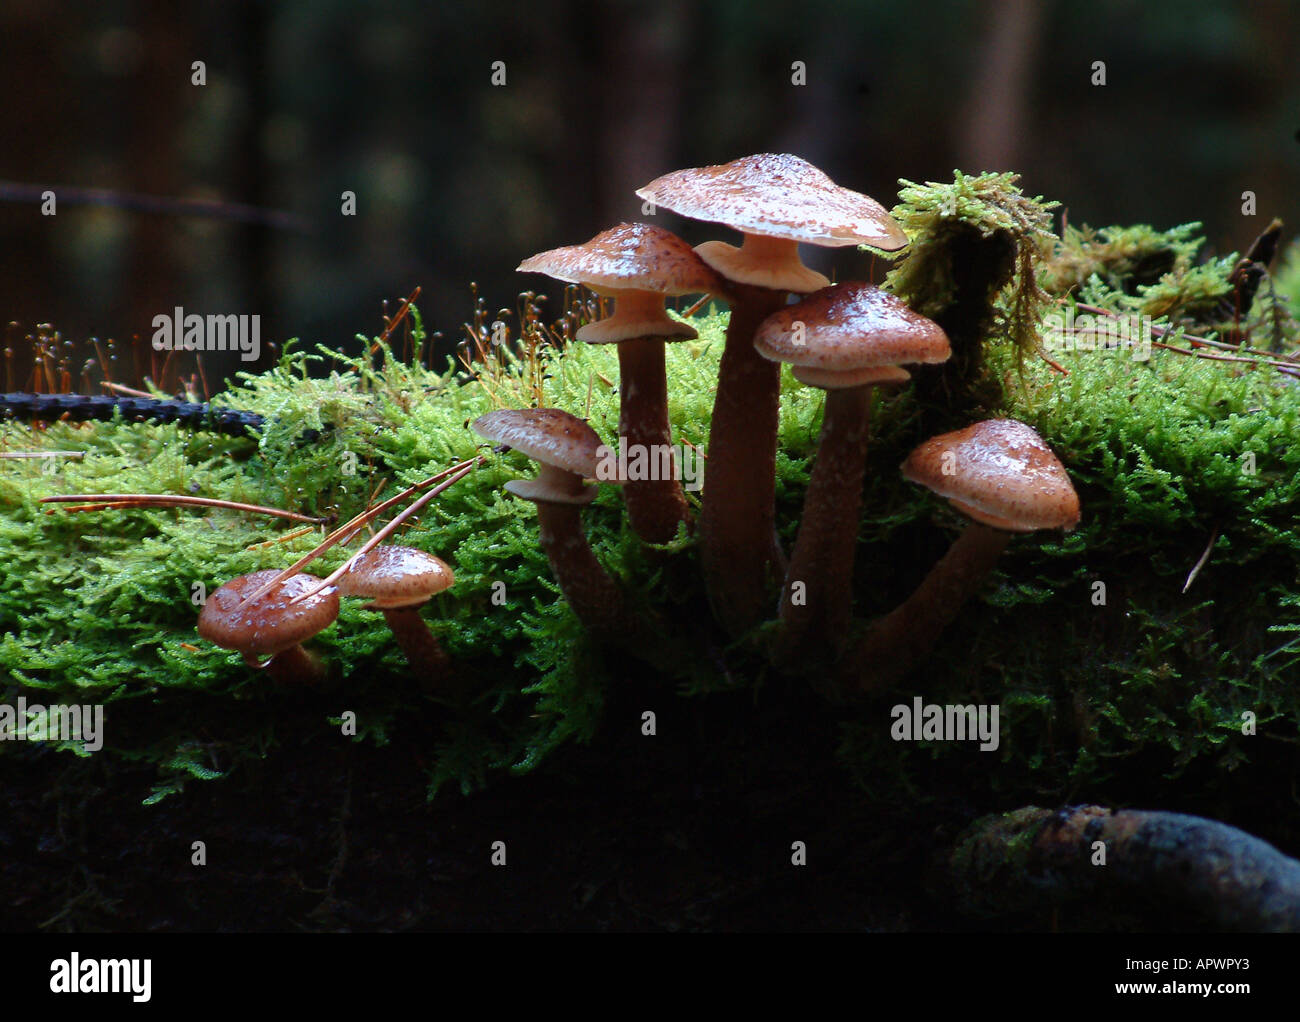 Fungus growing on a pine tree stump Stock Photo